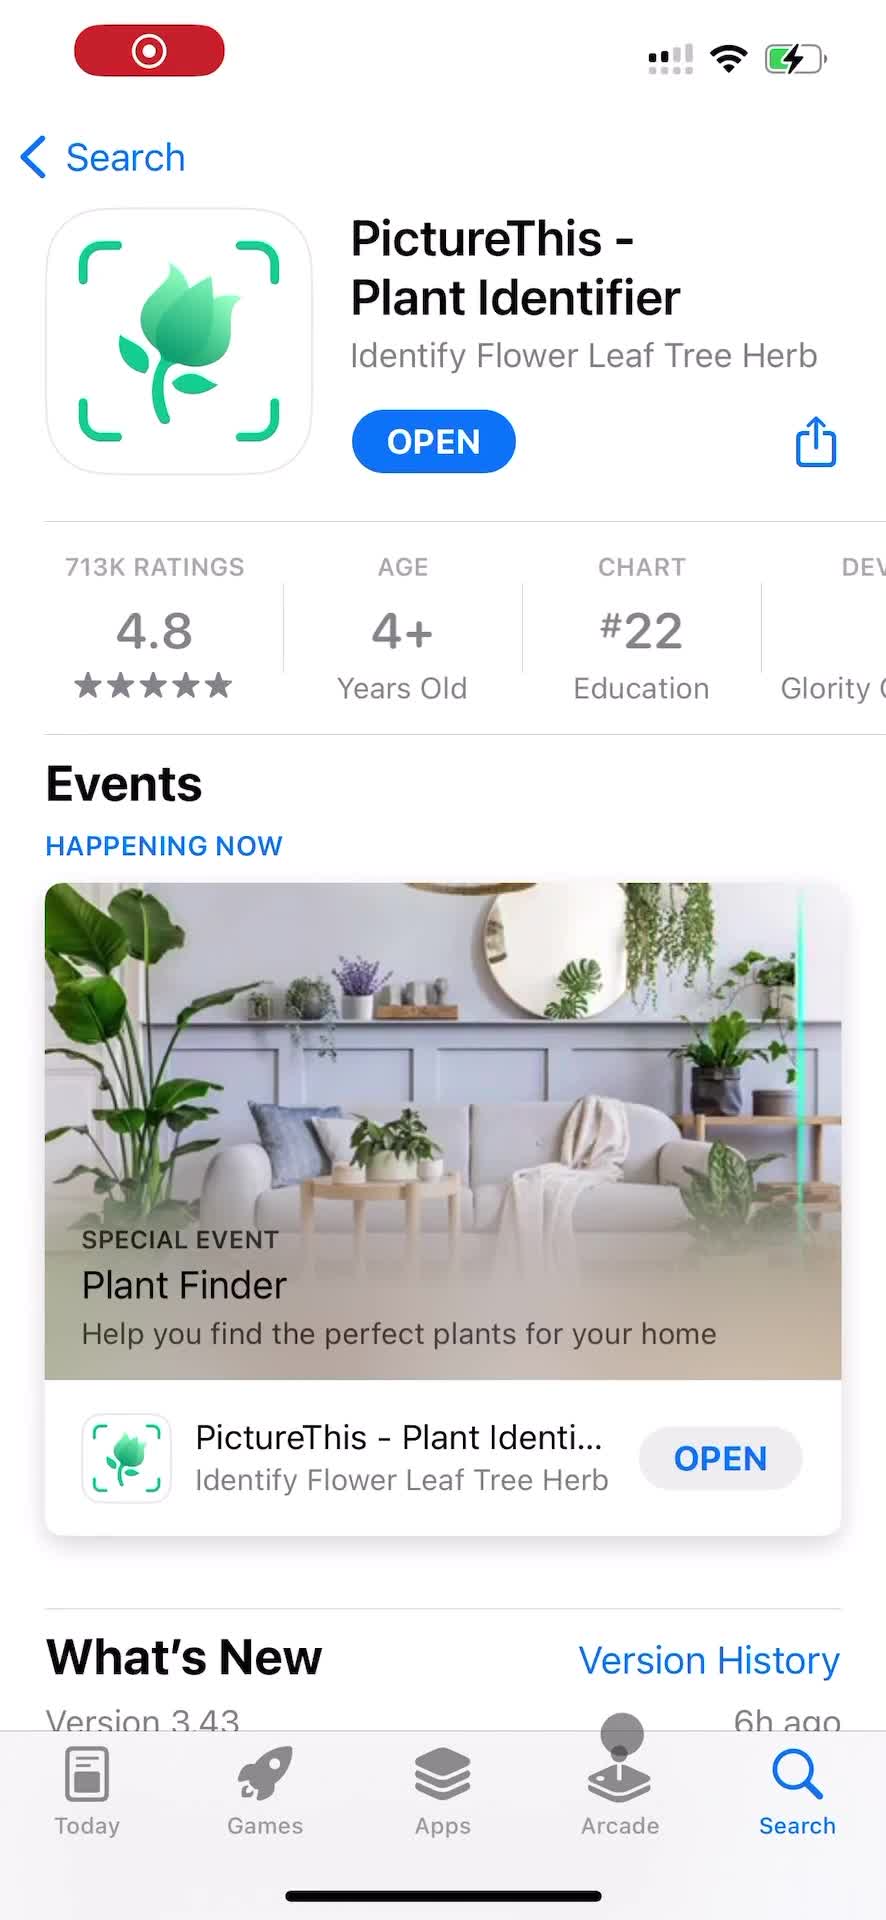 PictureThis app store listing screenshot